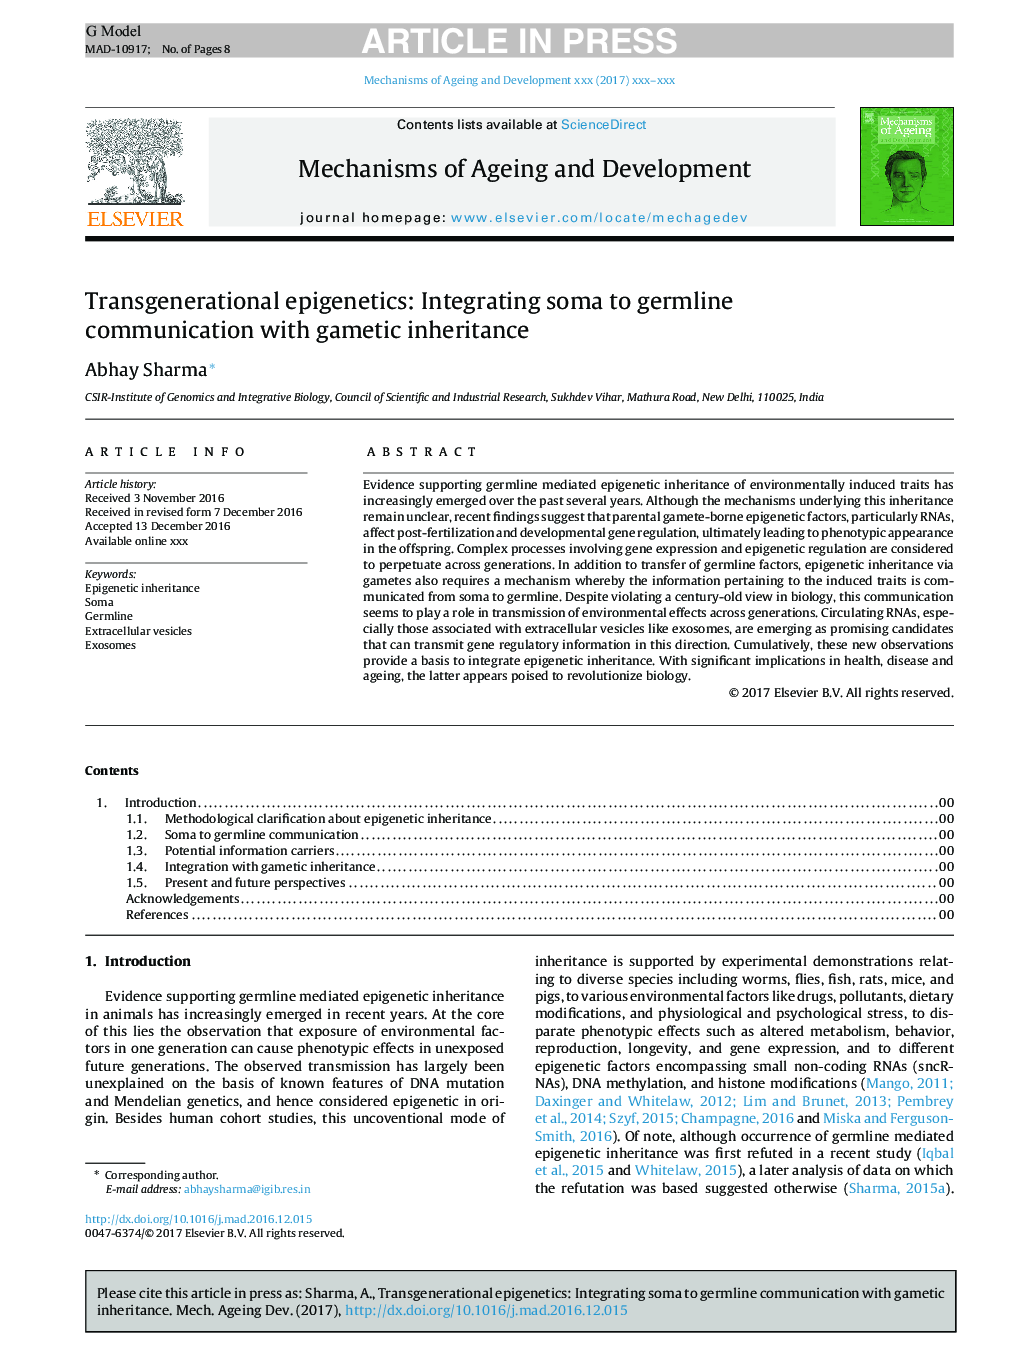 Transgenerational epigenetics: Integrating soma to germline communication with gametic inheritance